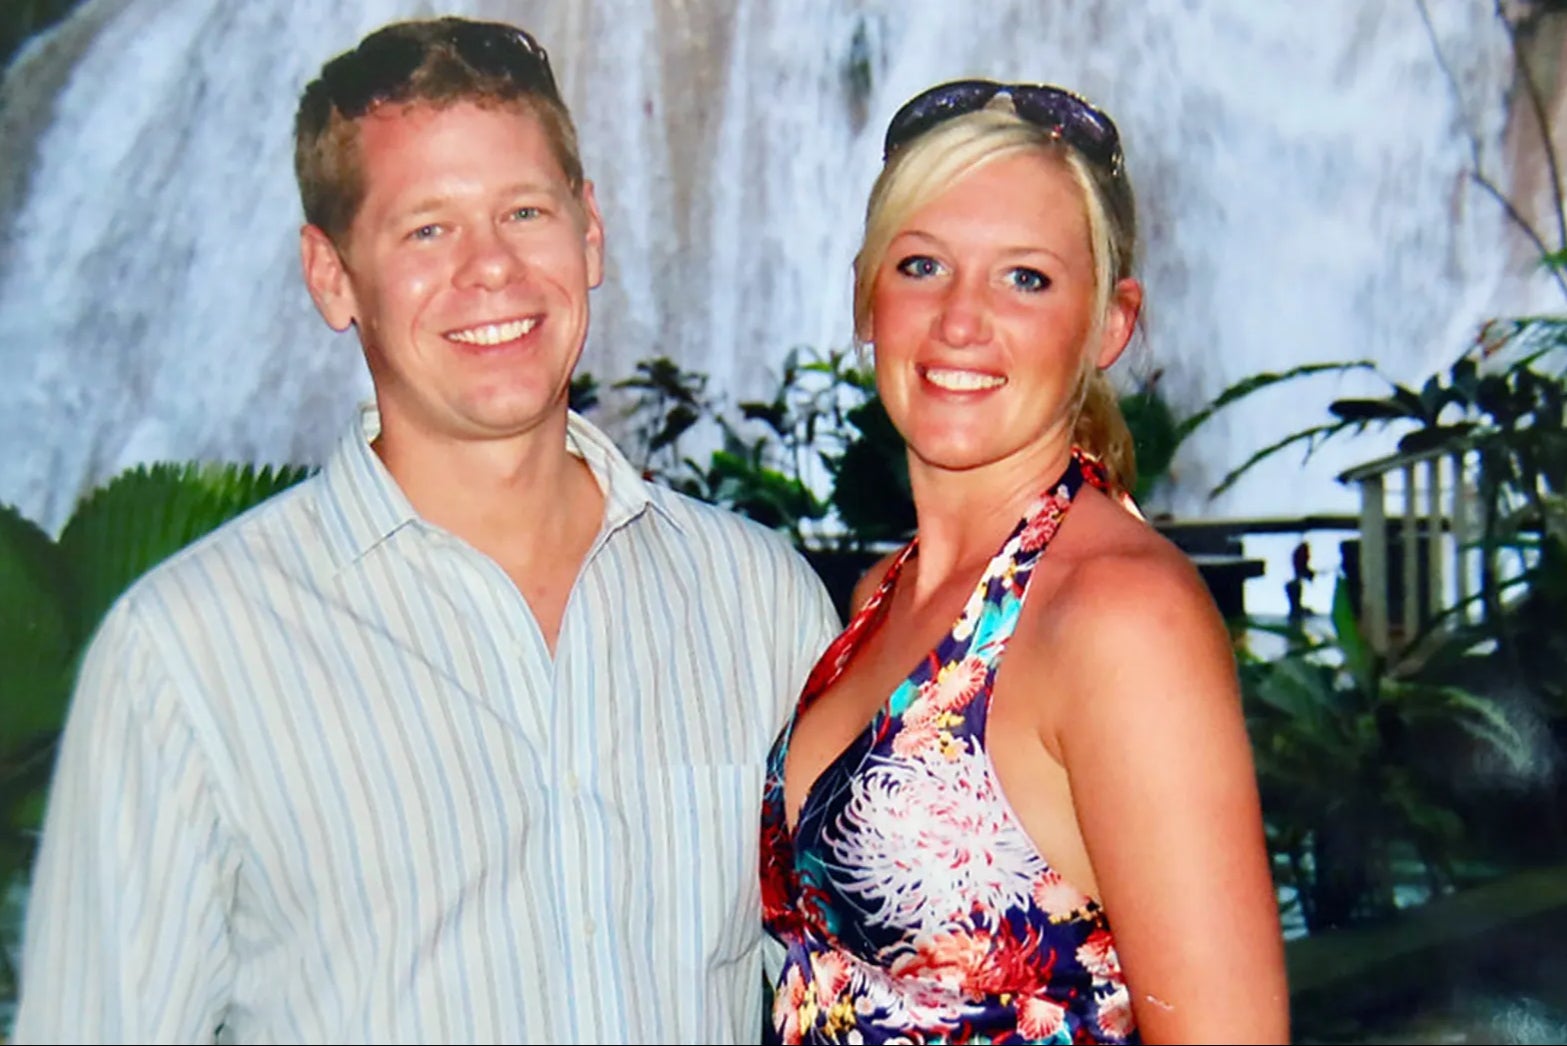 Ryan Bane pictured with his ex-wife Cori Stevenson